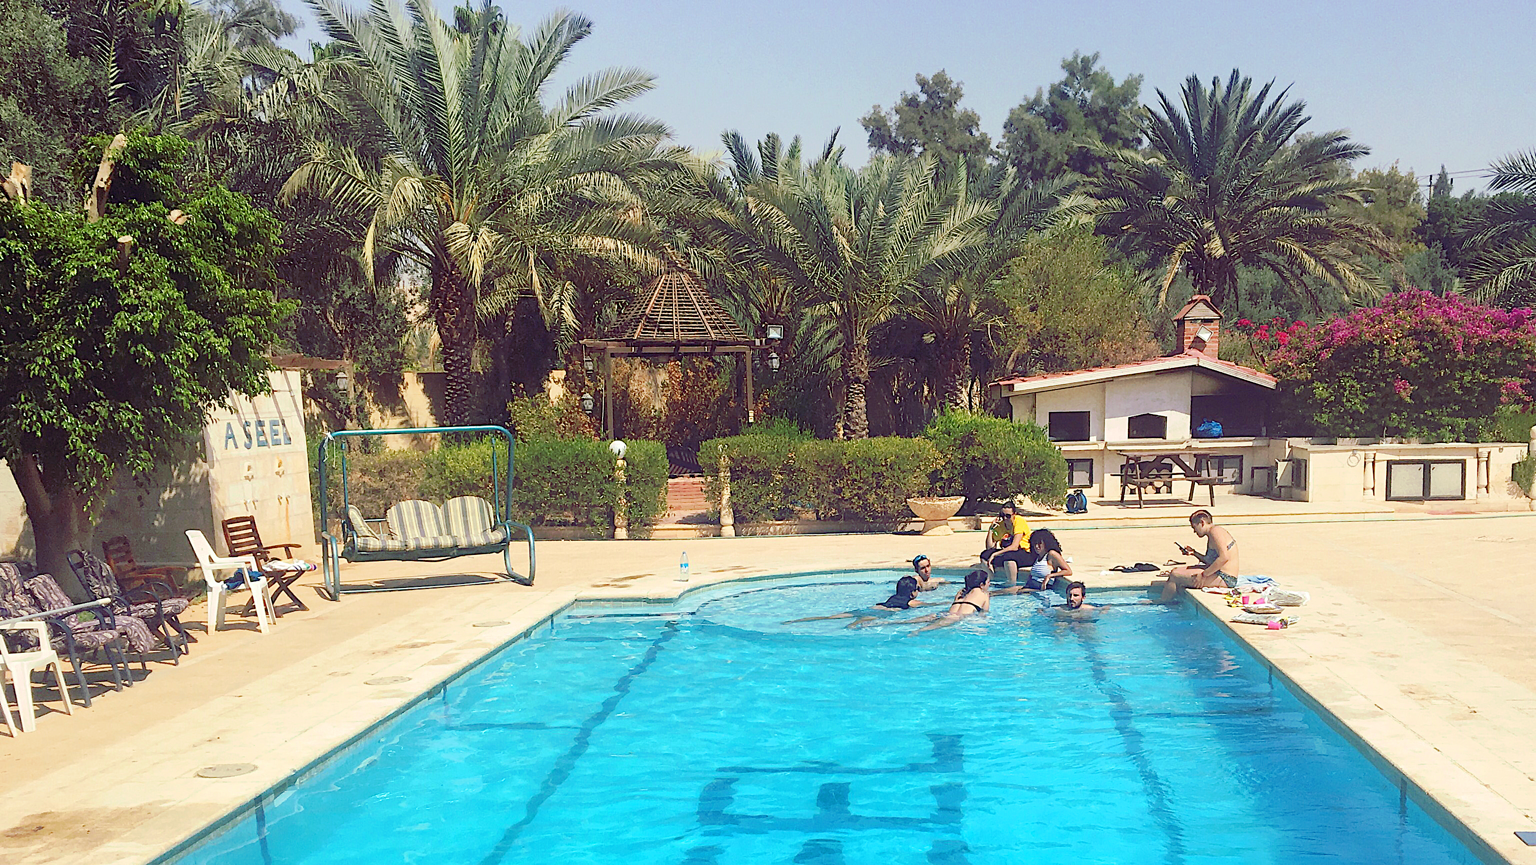 Throwback zur Pooltime im 40° heißen Jordanien
#pool #sommer #hollywoodschaukel